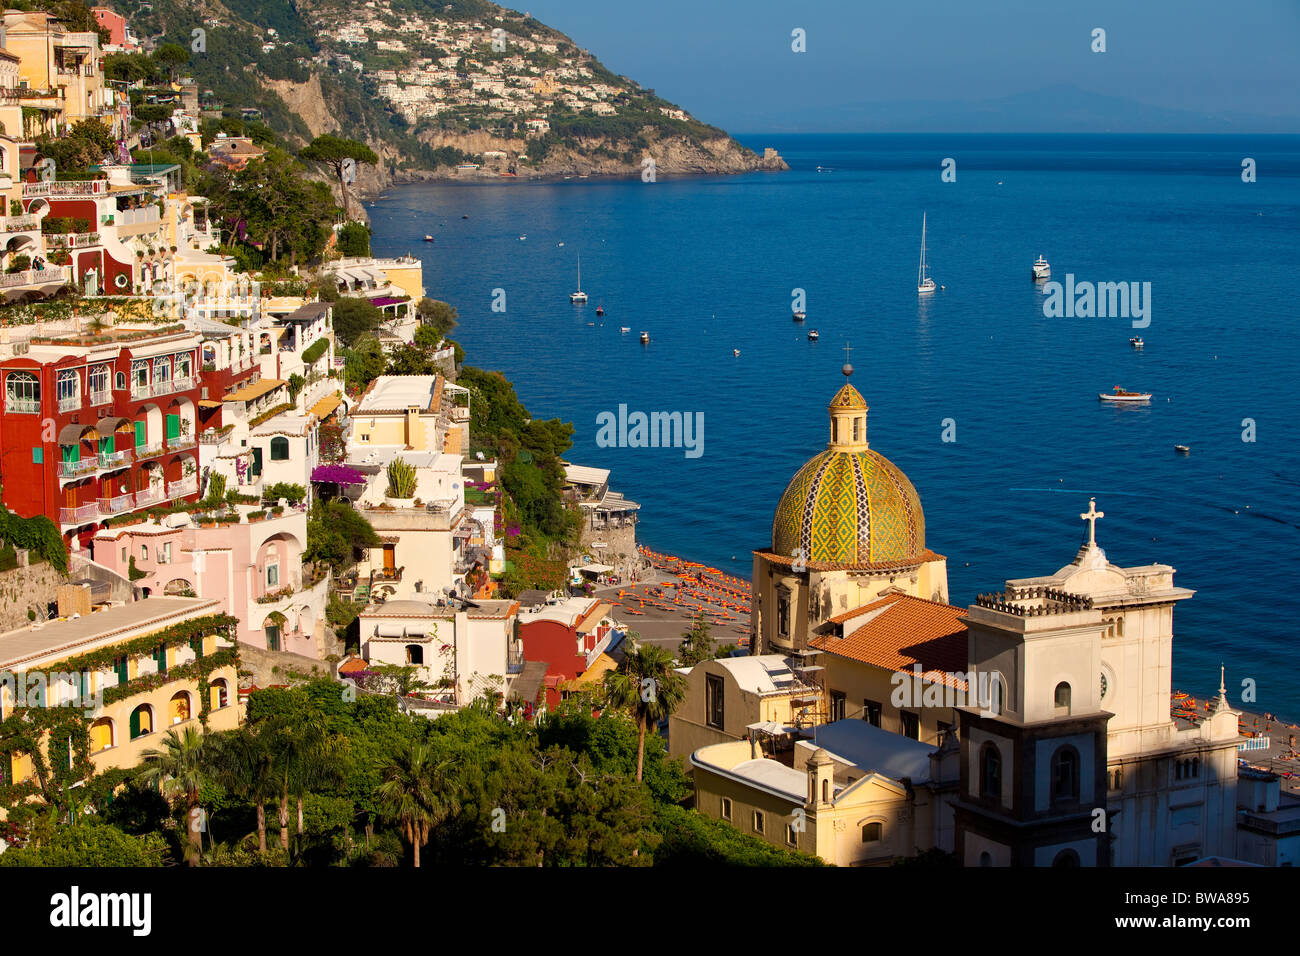 Dome of Chiesa Santa Maria Assunta and the hillside town of Positano along the Amalfi Coast, Campania, Italy Stock Photo